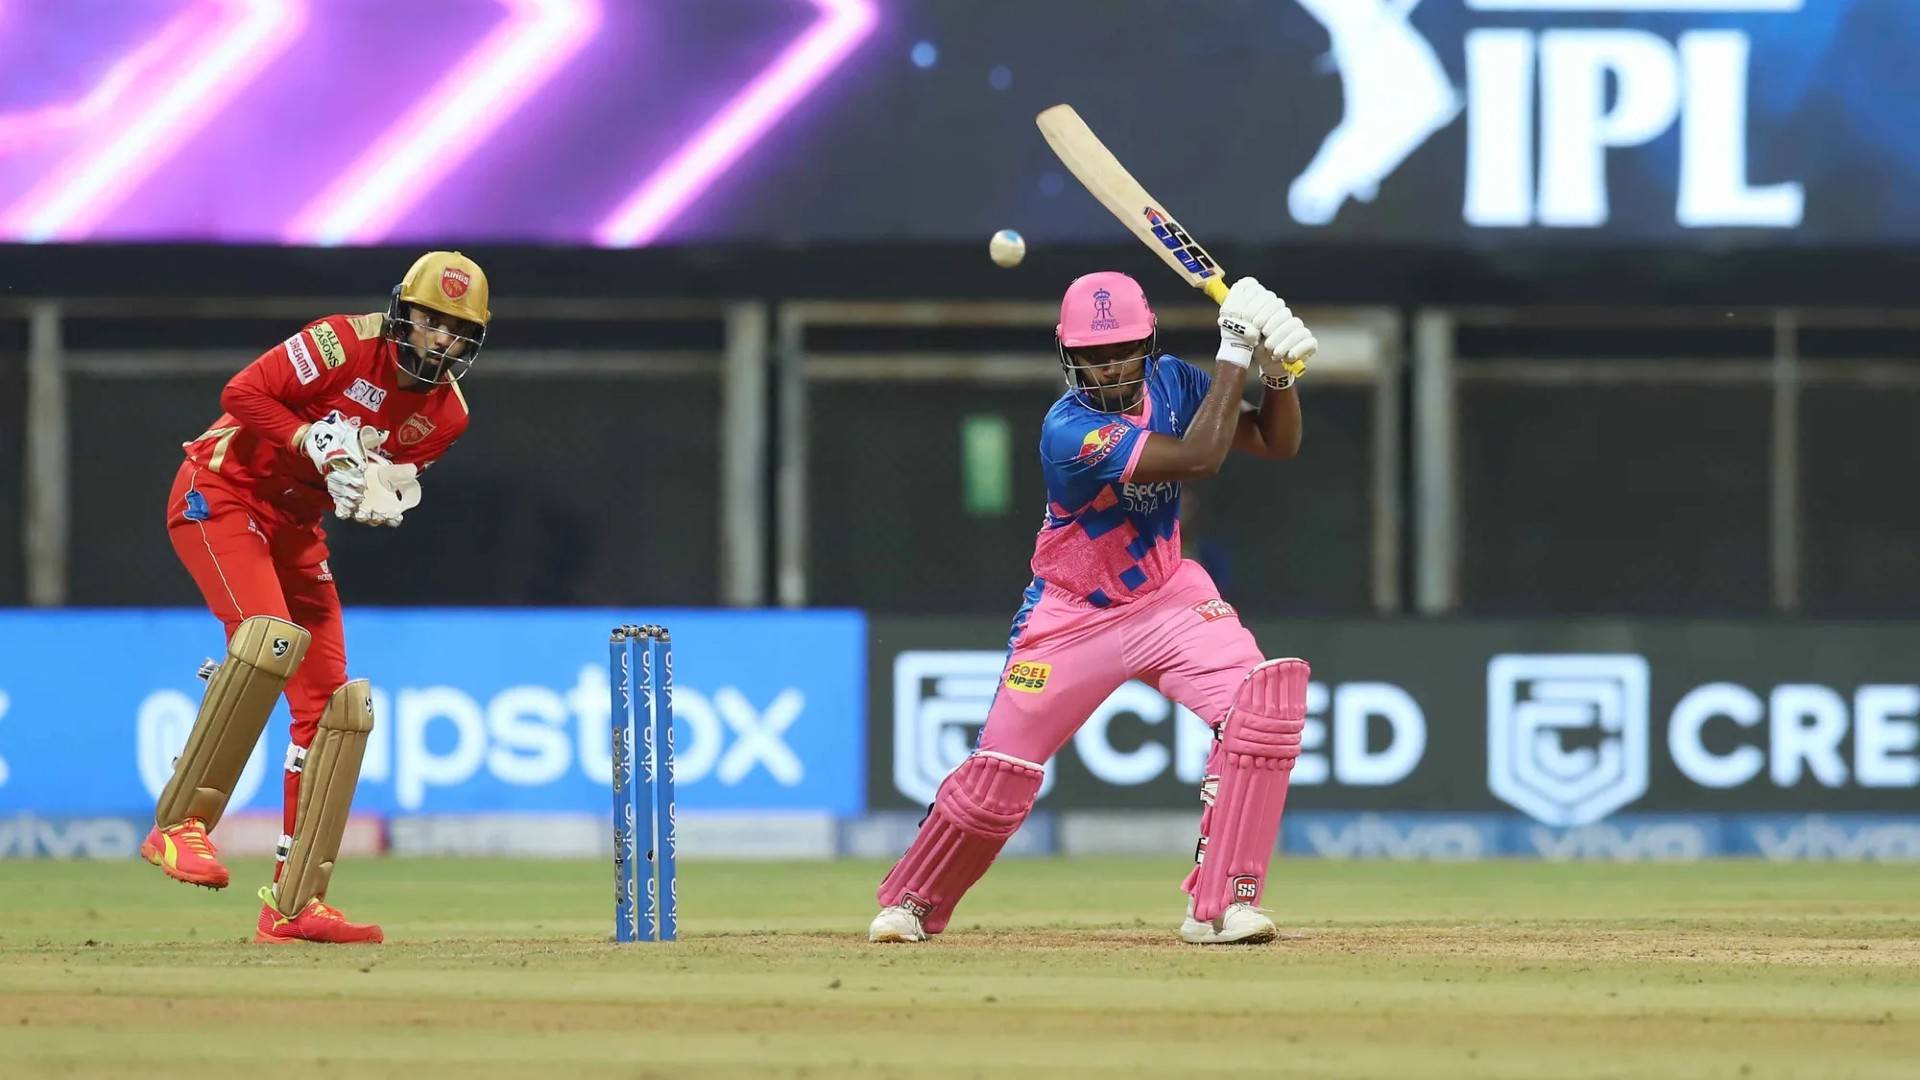 Sanju Samson plays a shot. (Image: BCCI/IPL)